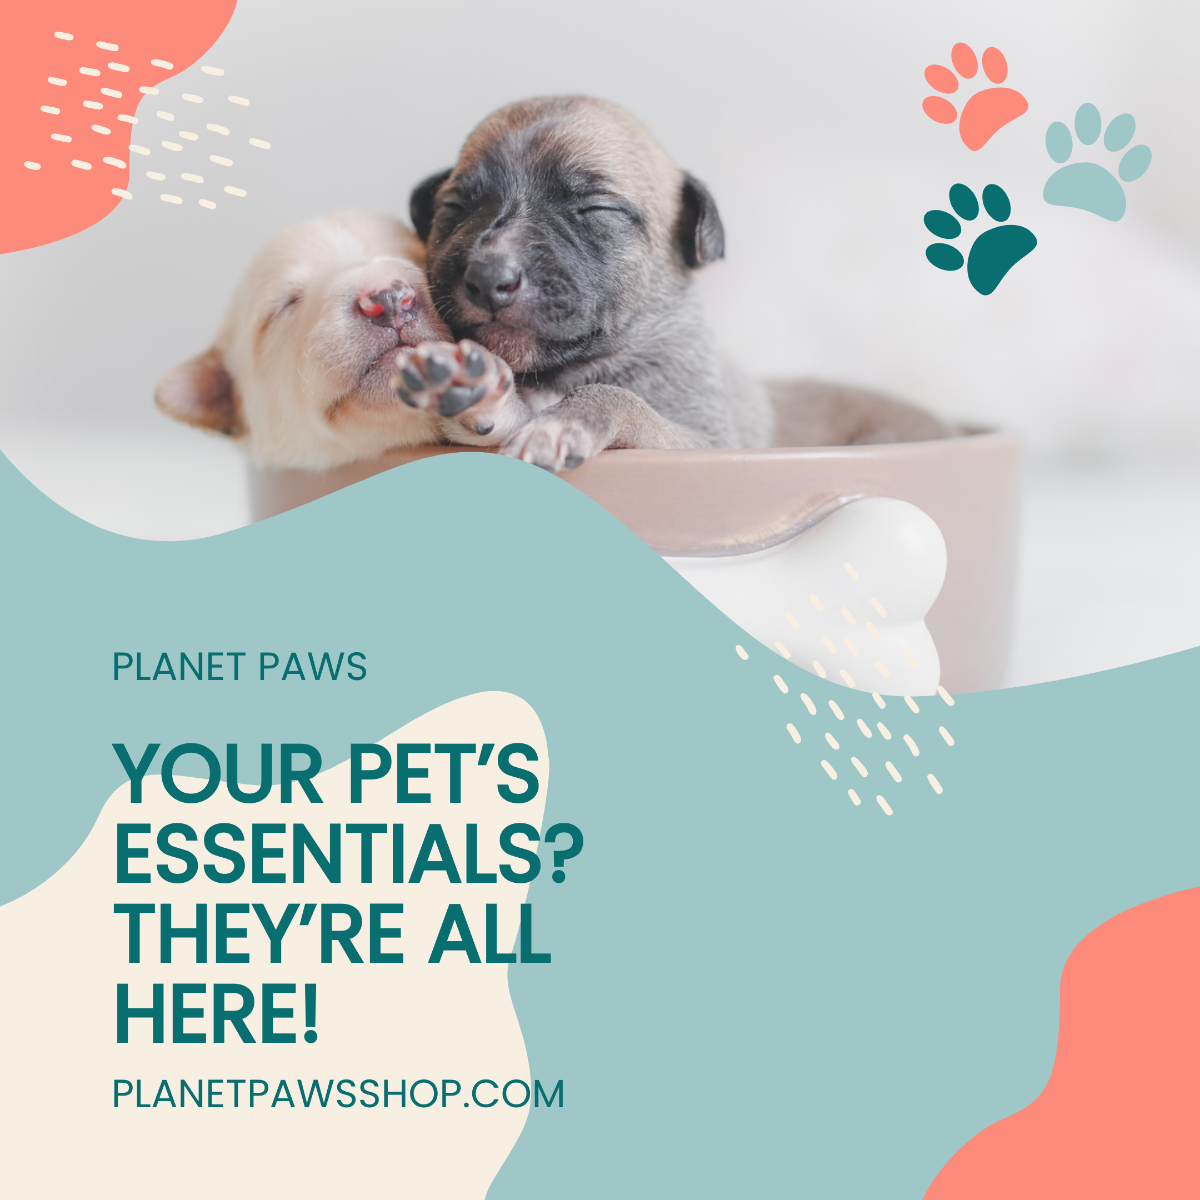 Free Pet Shop Instagram Post Template